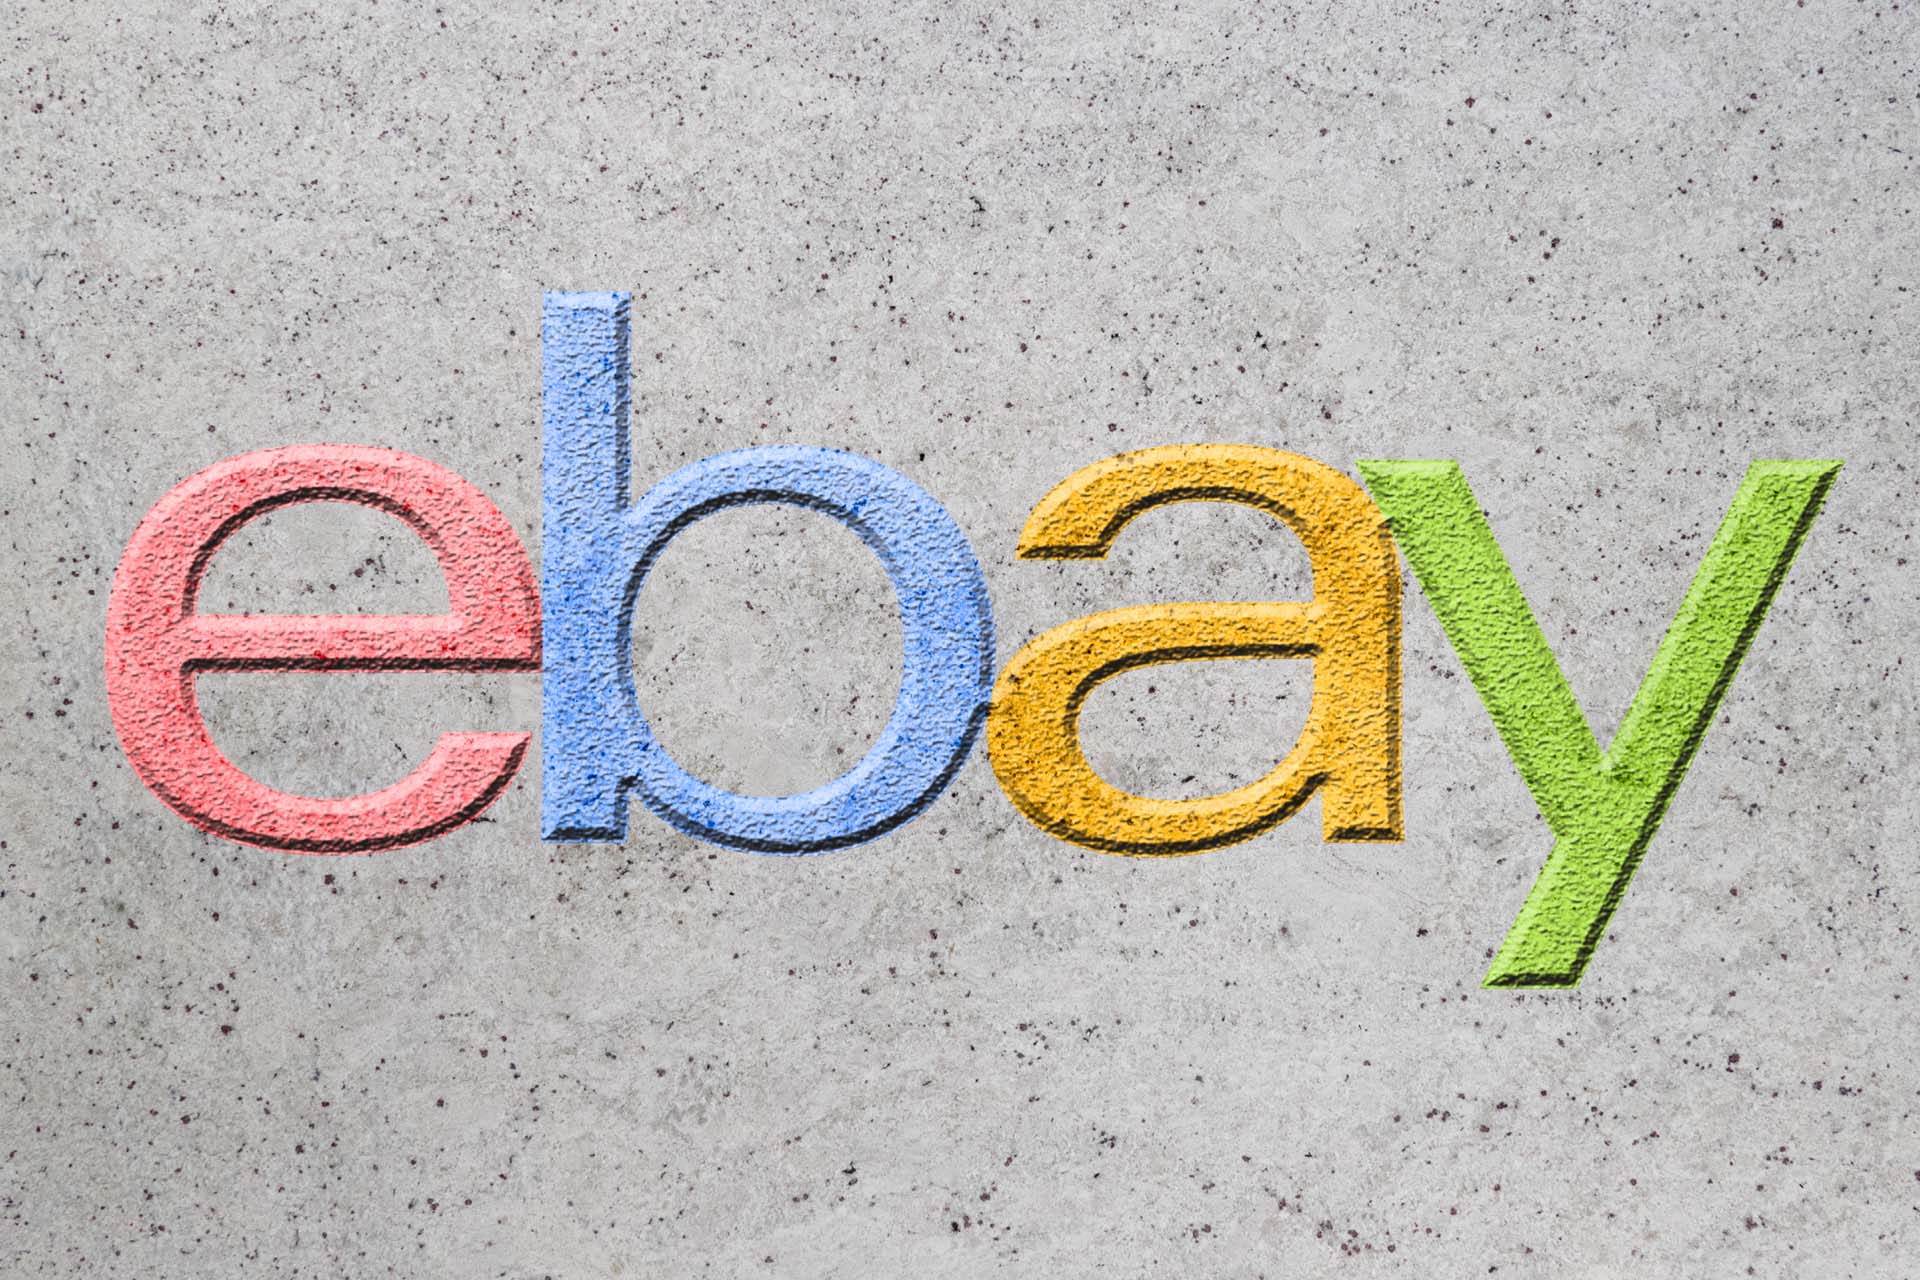 Ebay Granite Worktops A Really Great Deal